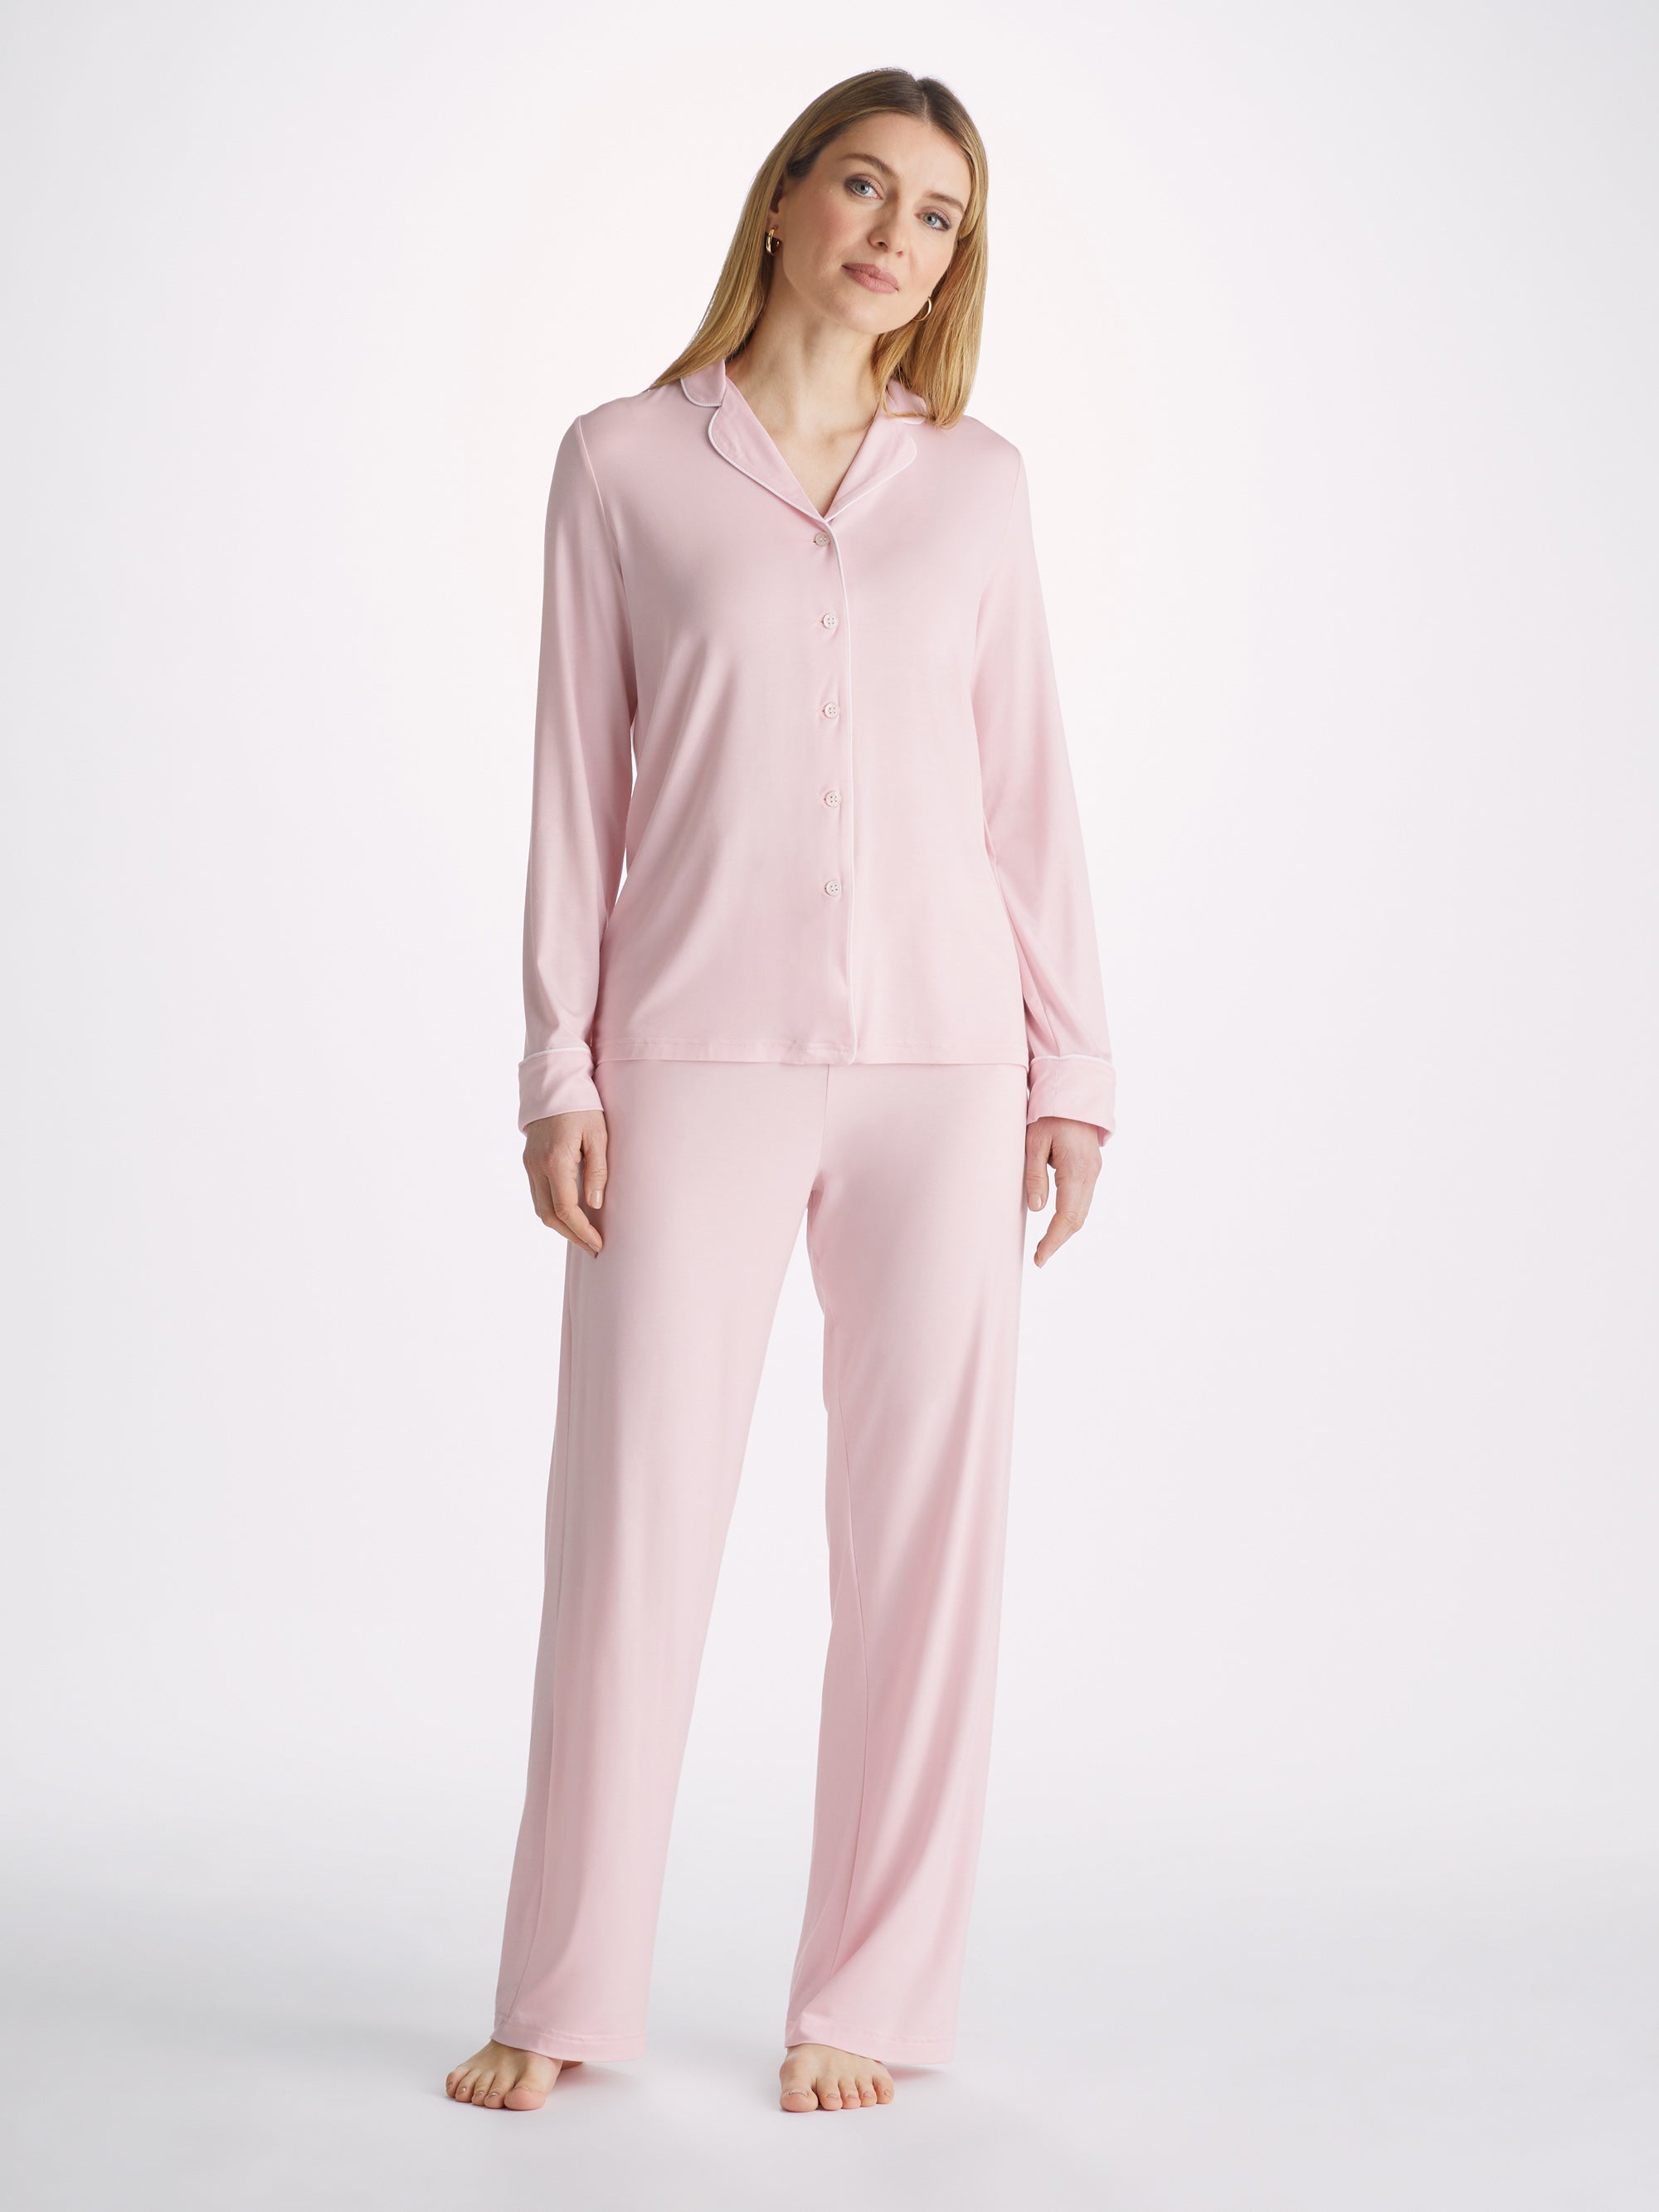 Lara Micro Modal Stretch Ballet Pink Women's Pyjamas